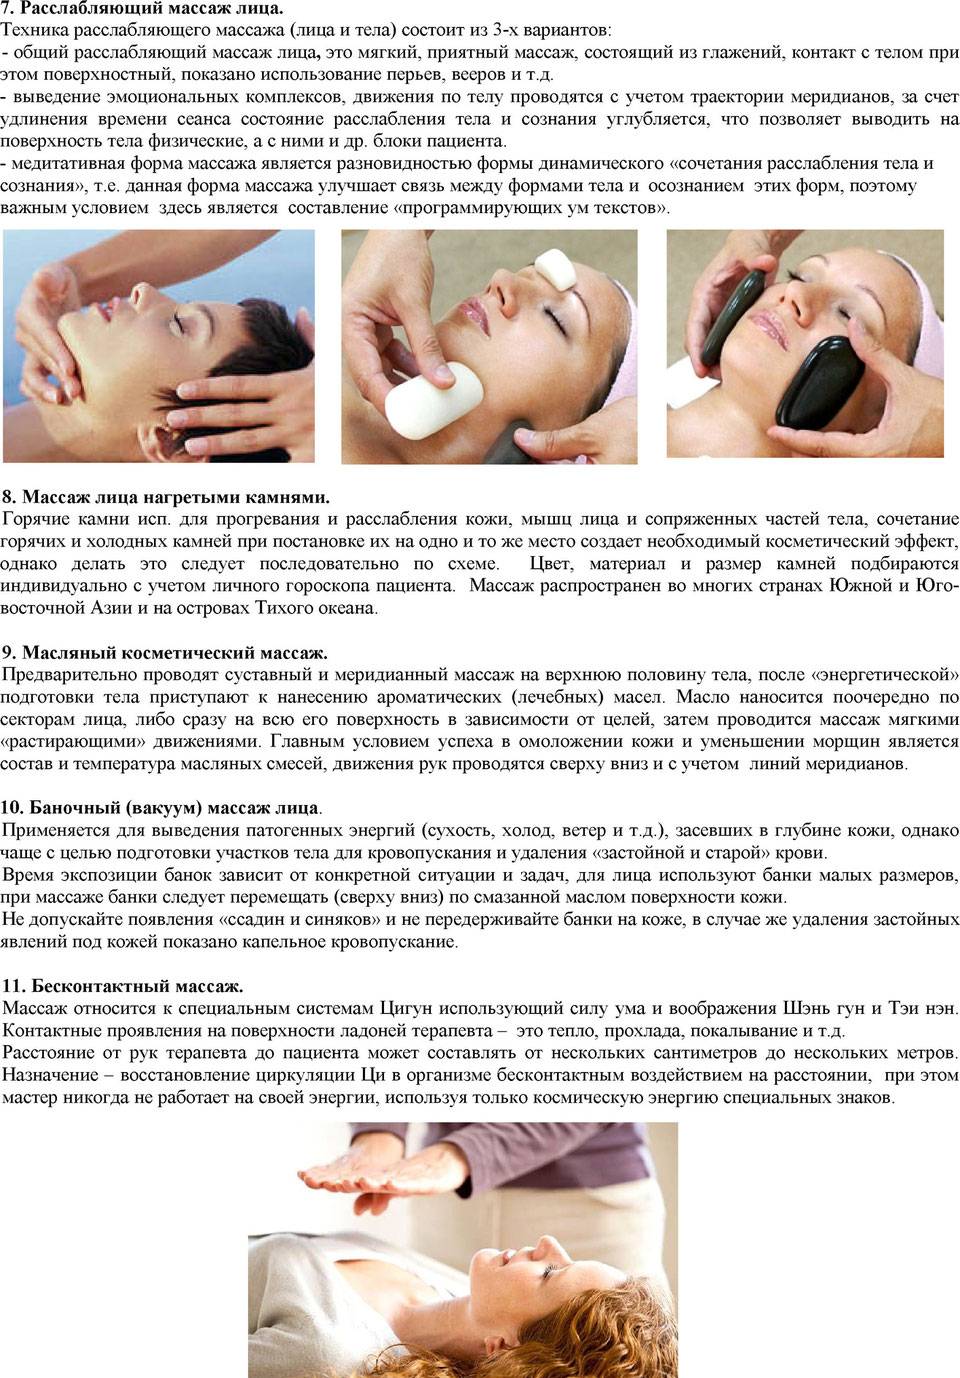 Вакуумный массаж для лица